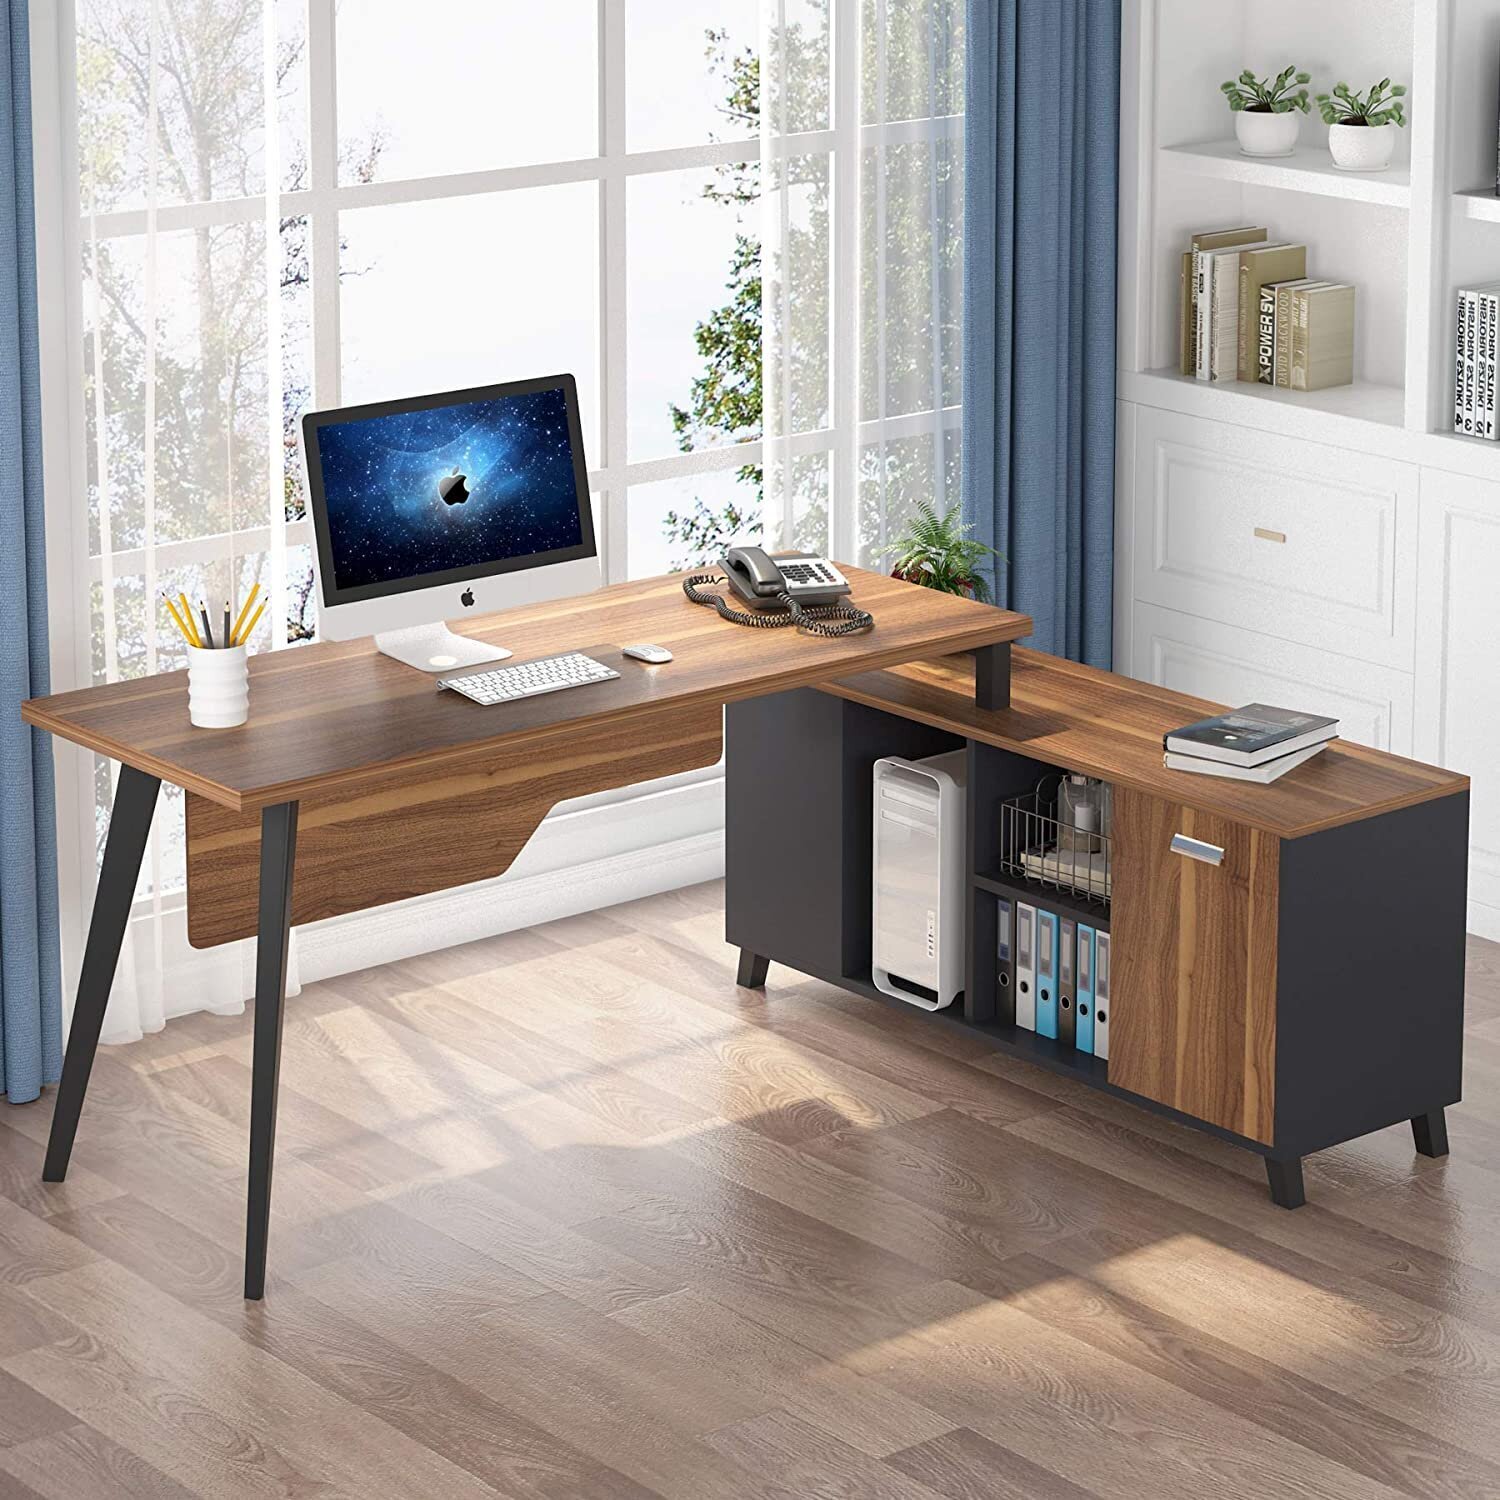 Mid century modern l shaped desks for home office